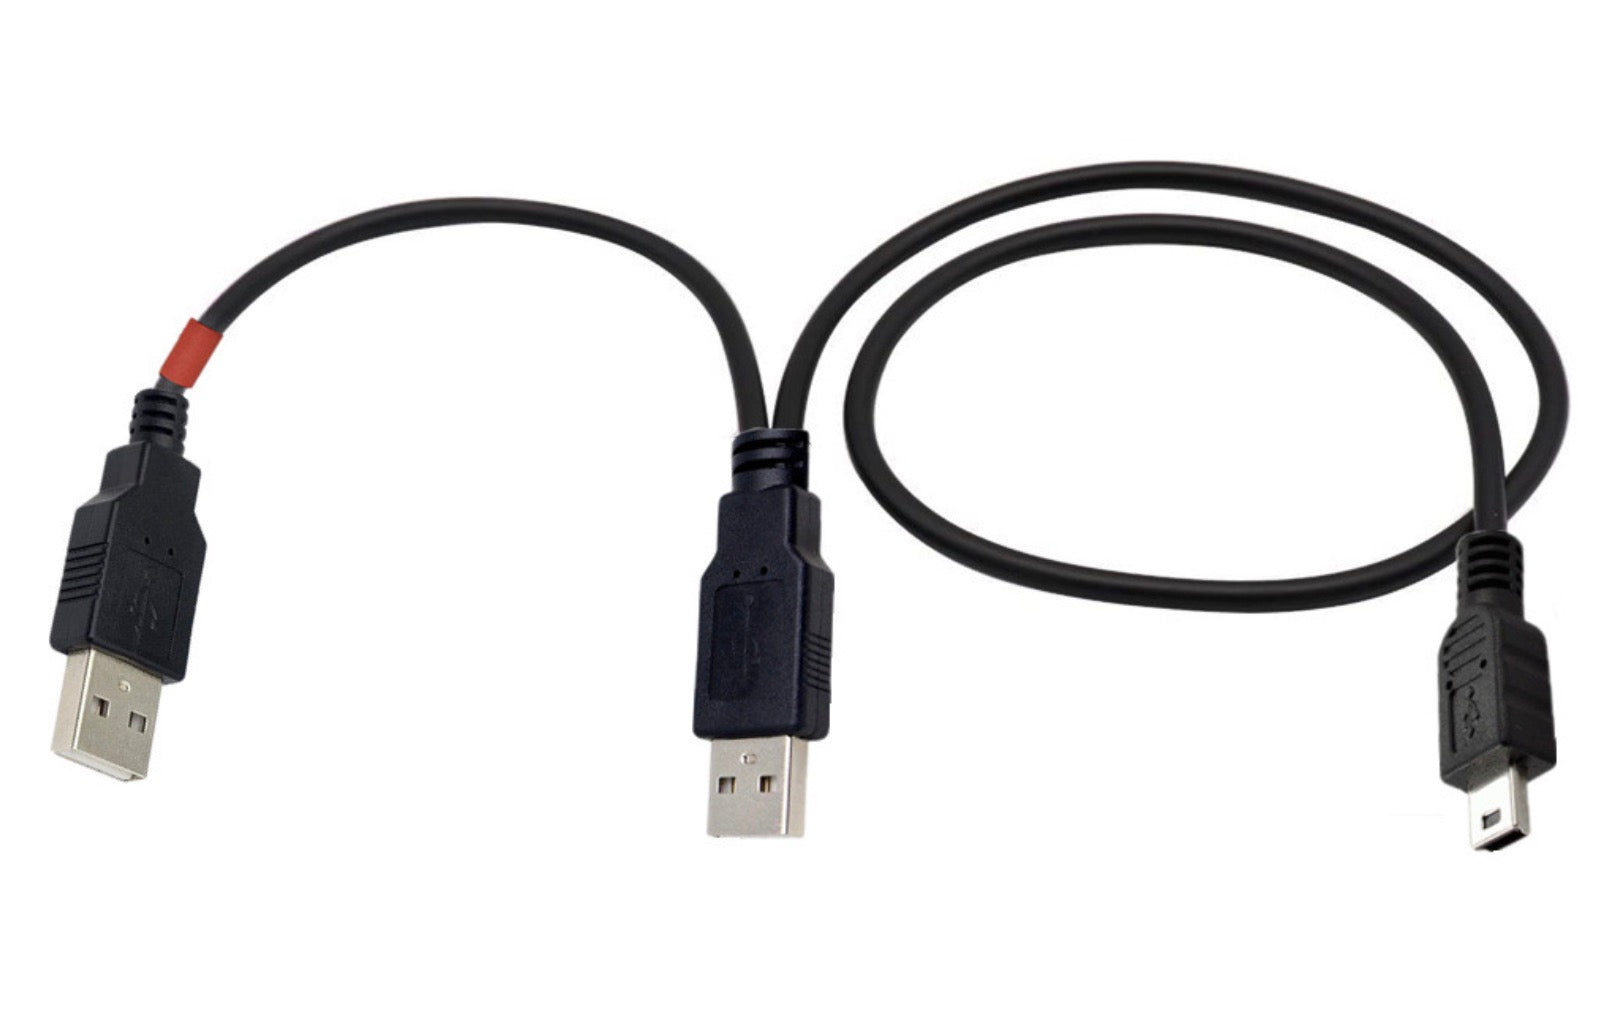 Mini B USB 2.0 Male to Dual USB 2.0 A Male Y Splitter Cable 0.8m